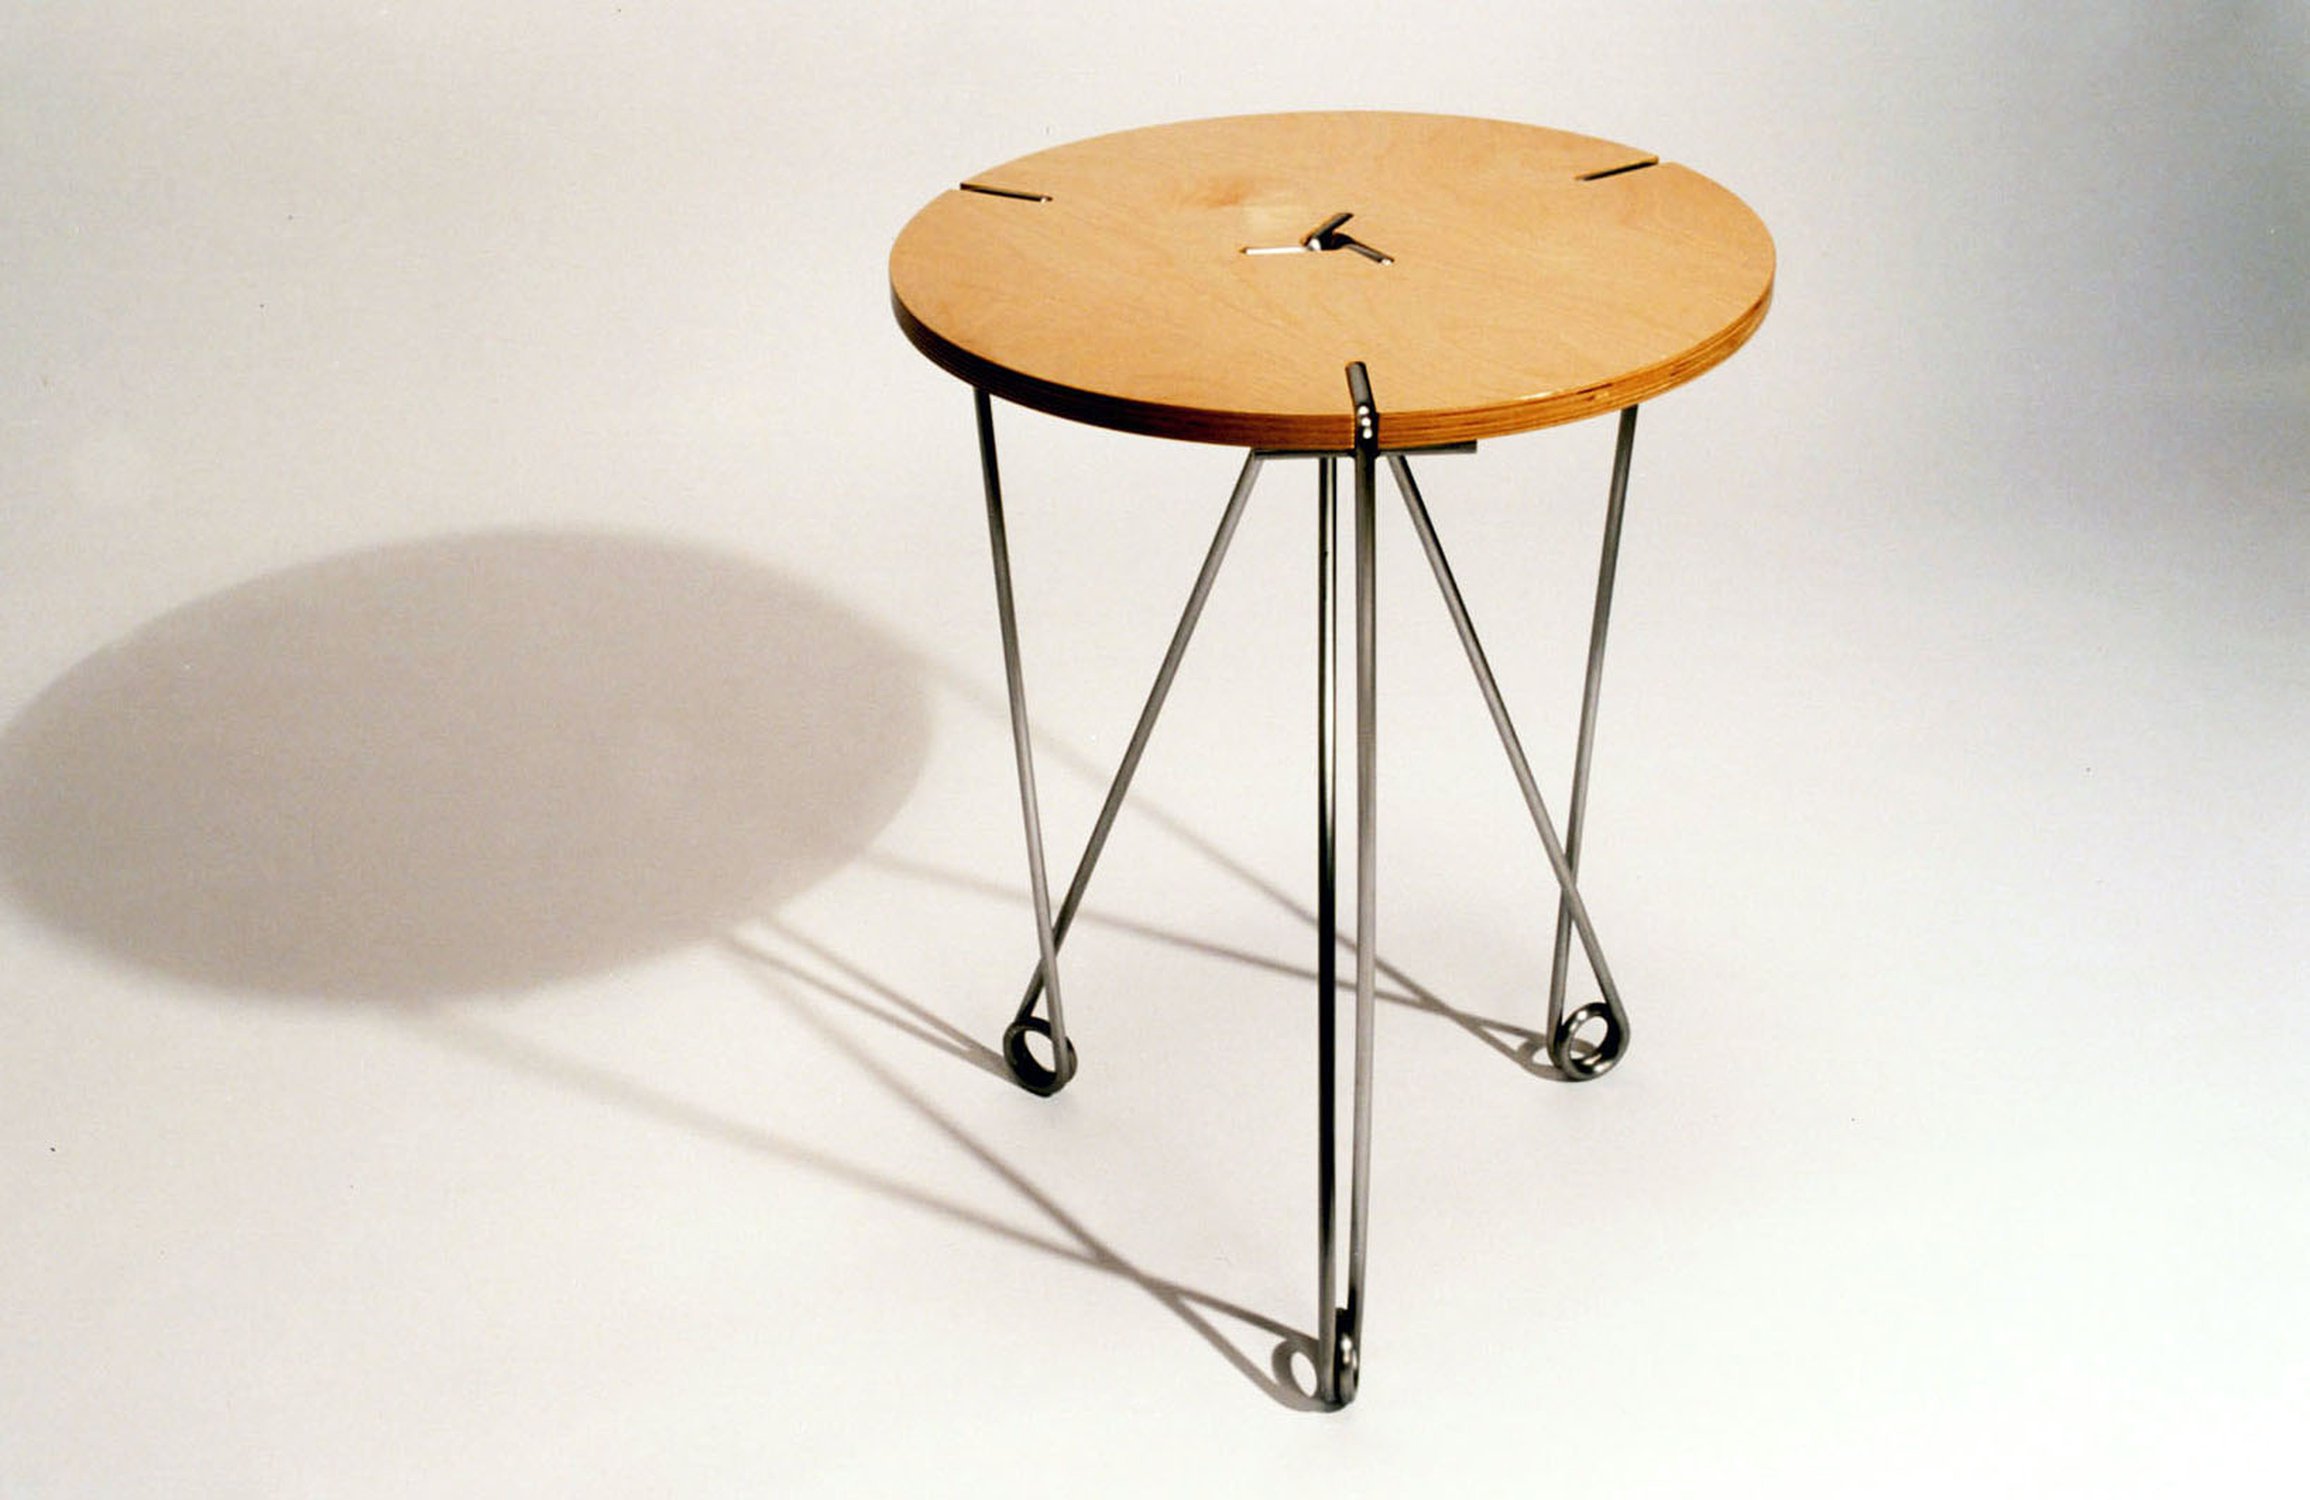 clothespin-table4a-andrewjonesdesign-07632.jpg